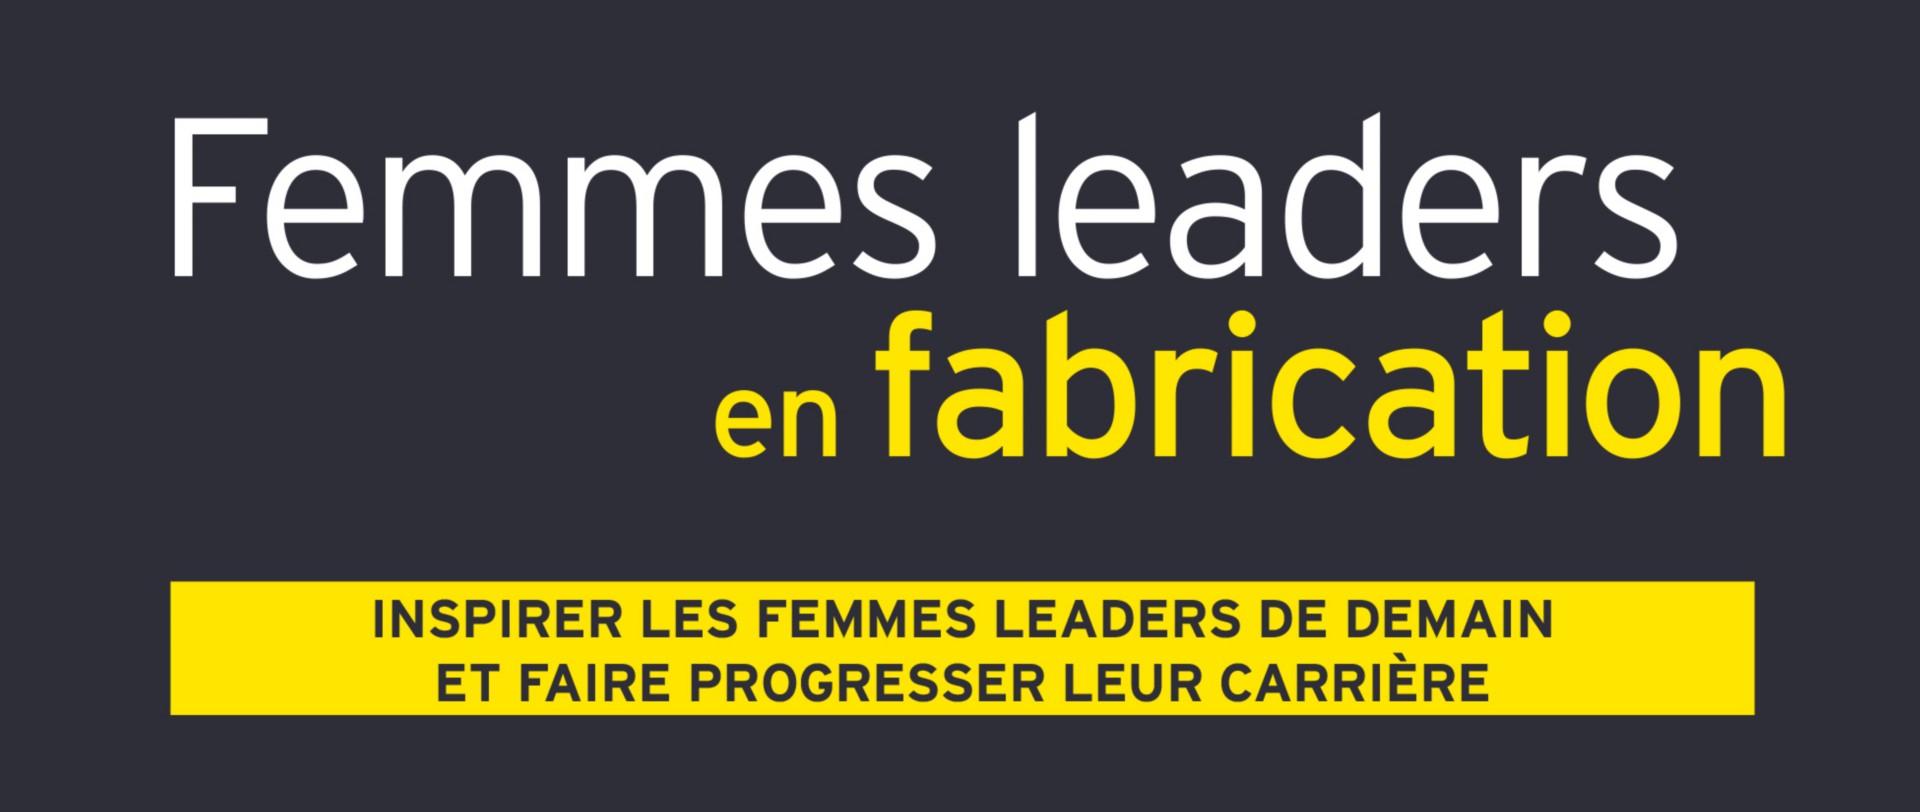 EY ‑ Femmes leaders en fabrication